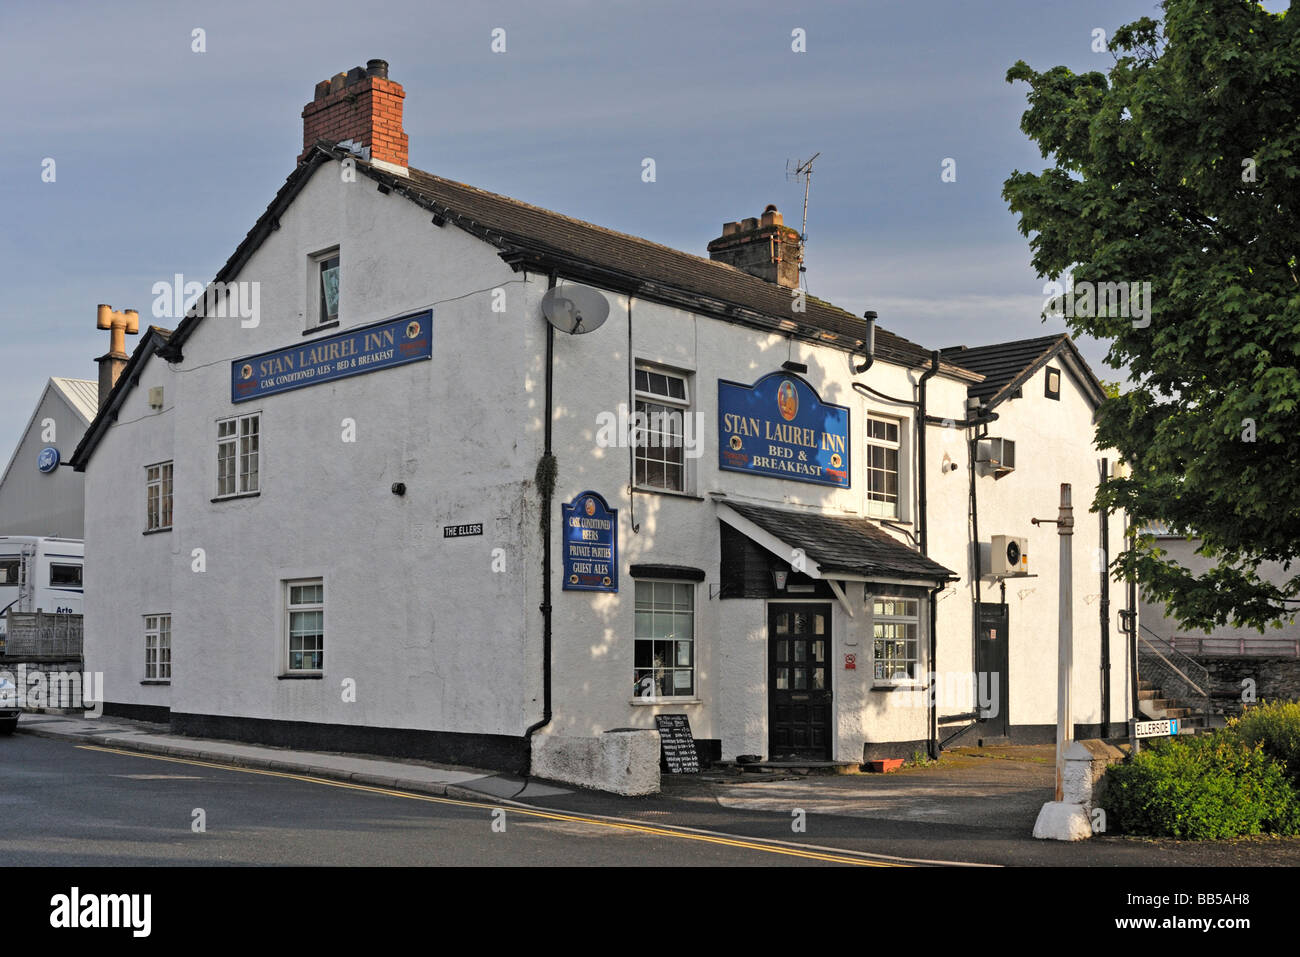 The Stan Laurel Inn, The Ellers, Ulverston, Cumbria, England, United Kingdom, Europe. Stock Photo